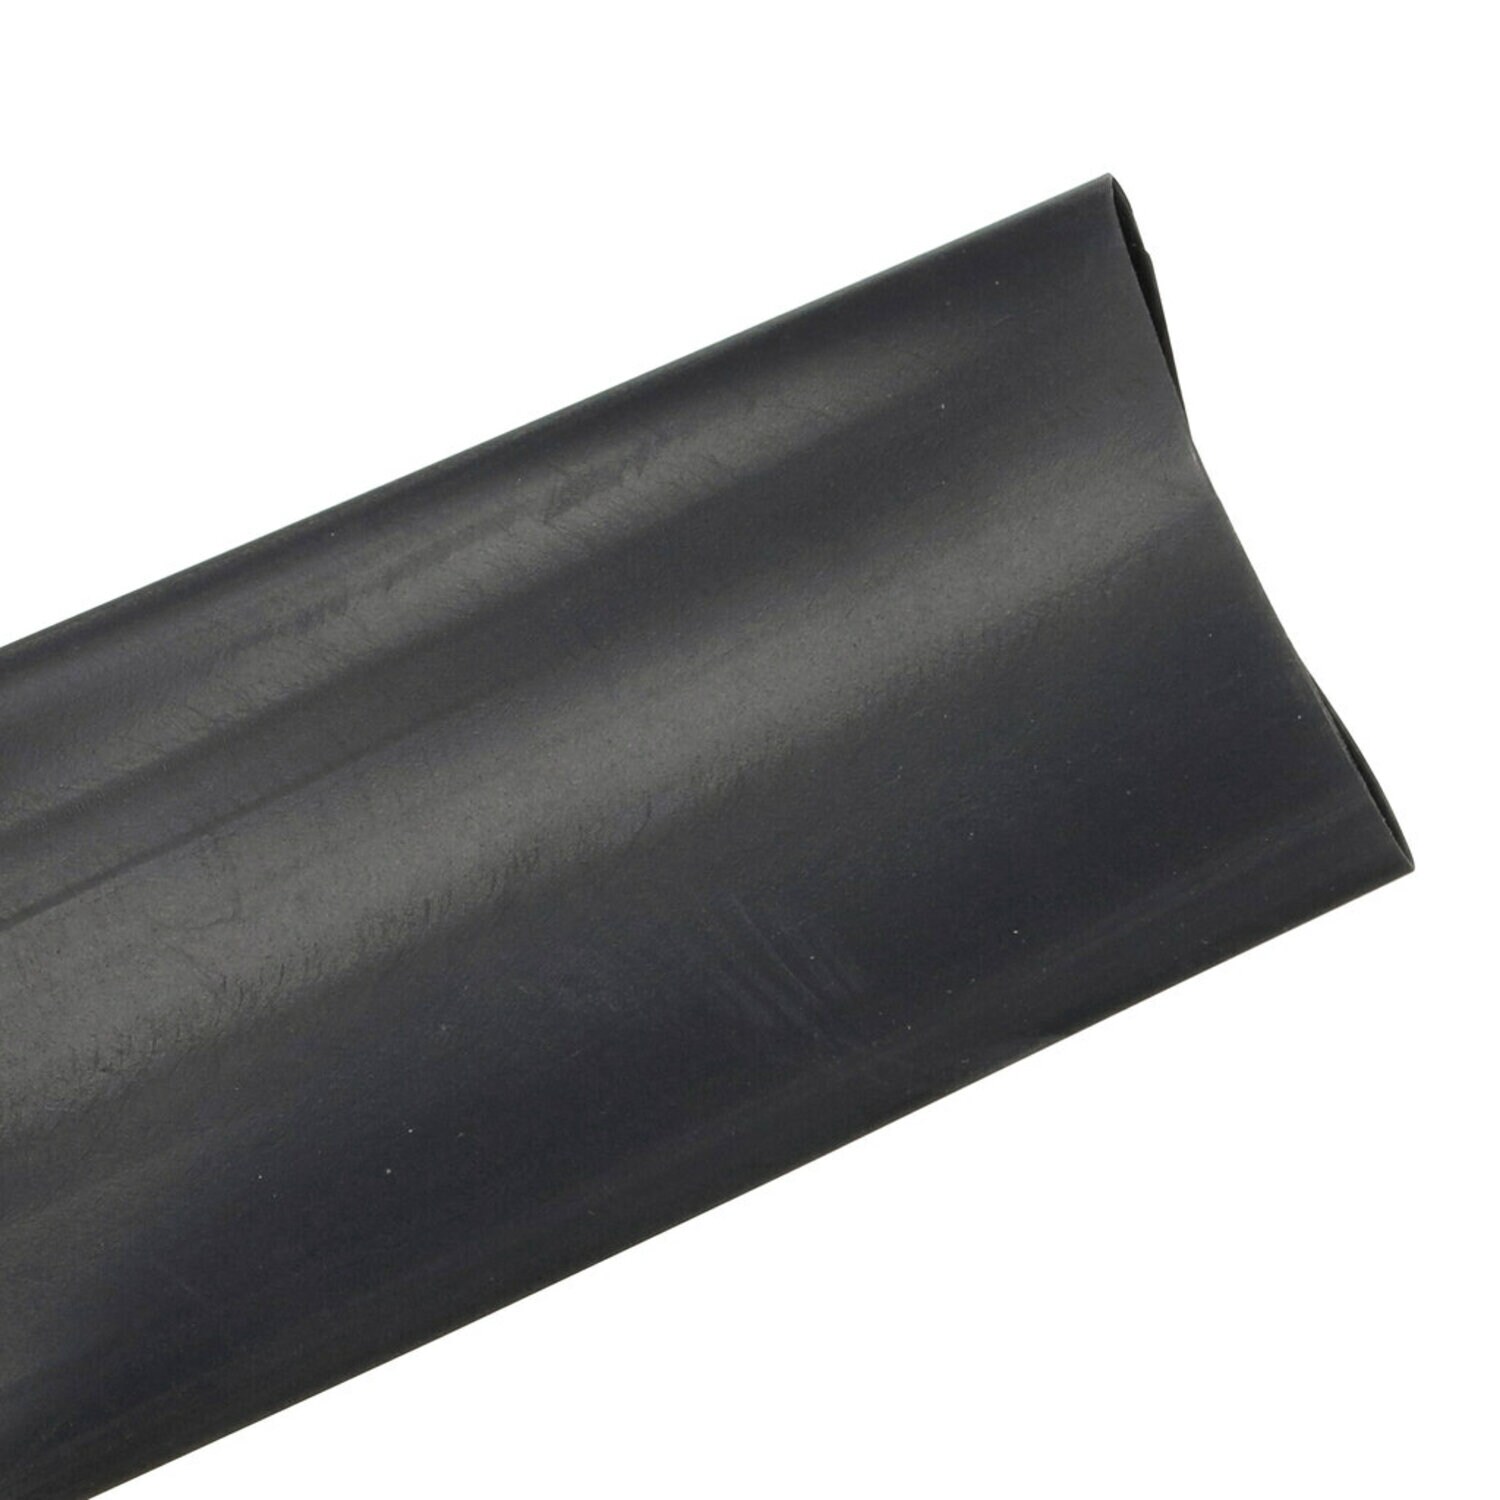 7100019840 - 3M Heat Shrink Thin-Wall Tubing FP-301-1.25-Black-100': 100 ft spool
length, 300 linear ft/box, 3 Rolls/Case